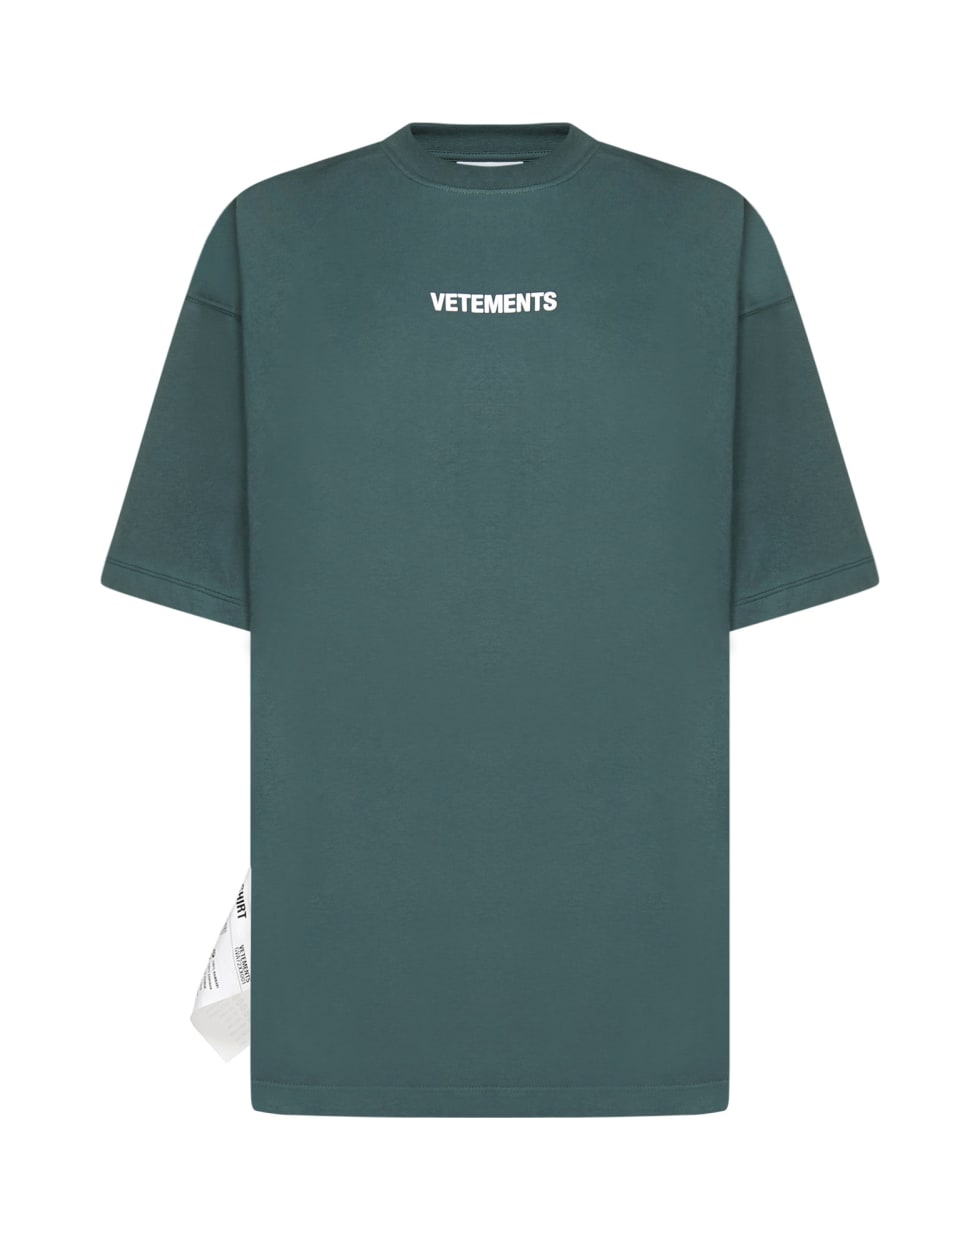 VETEMENTS T-Shirt - Police green white